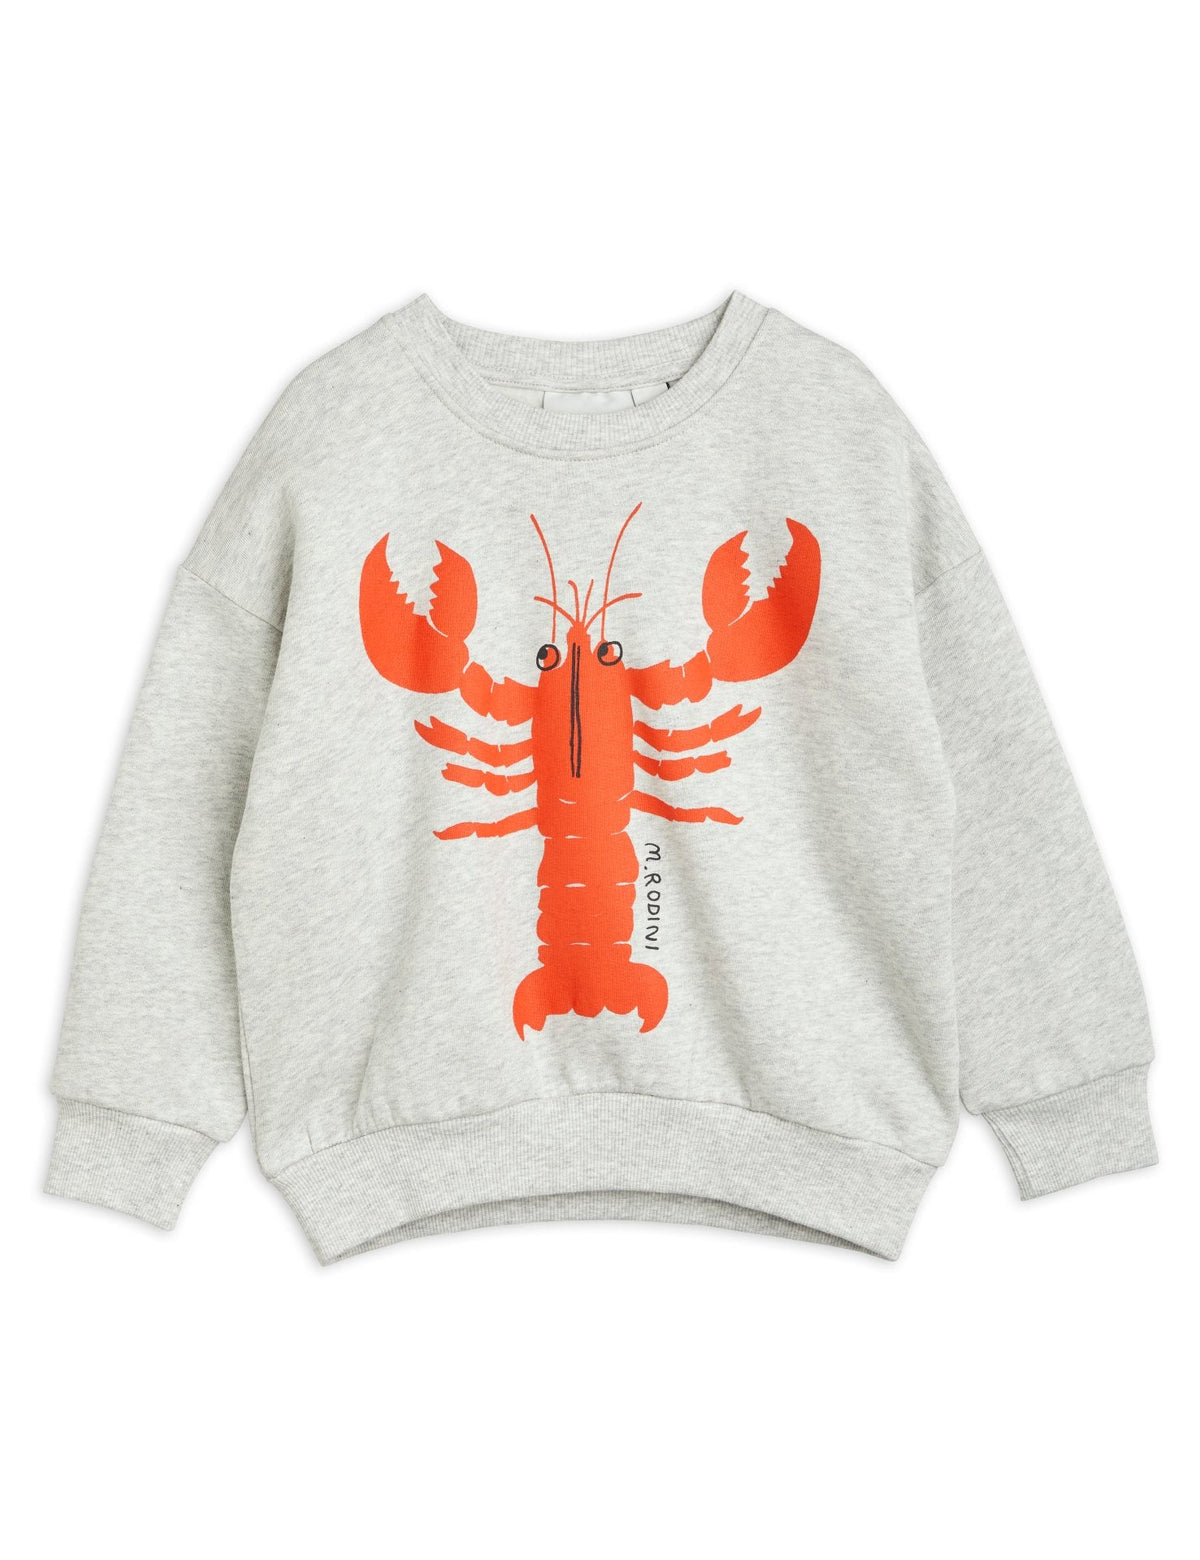 Lobster sp sweatshirt